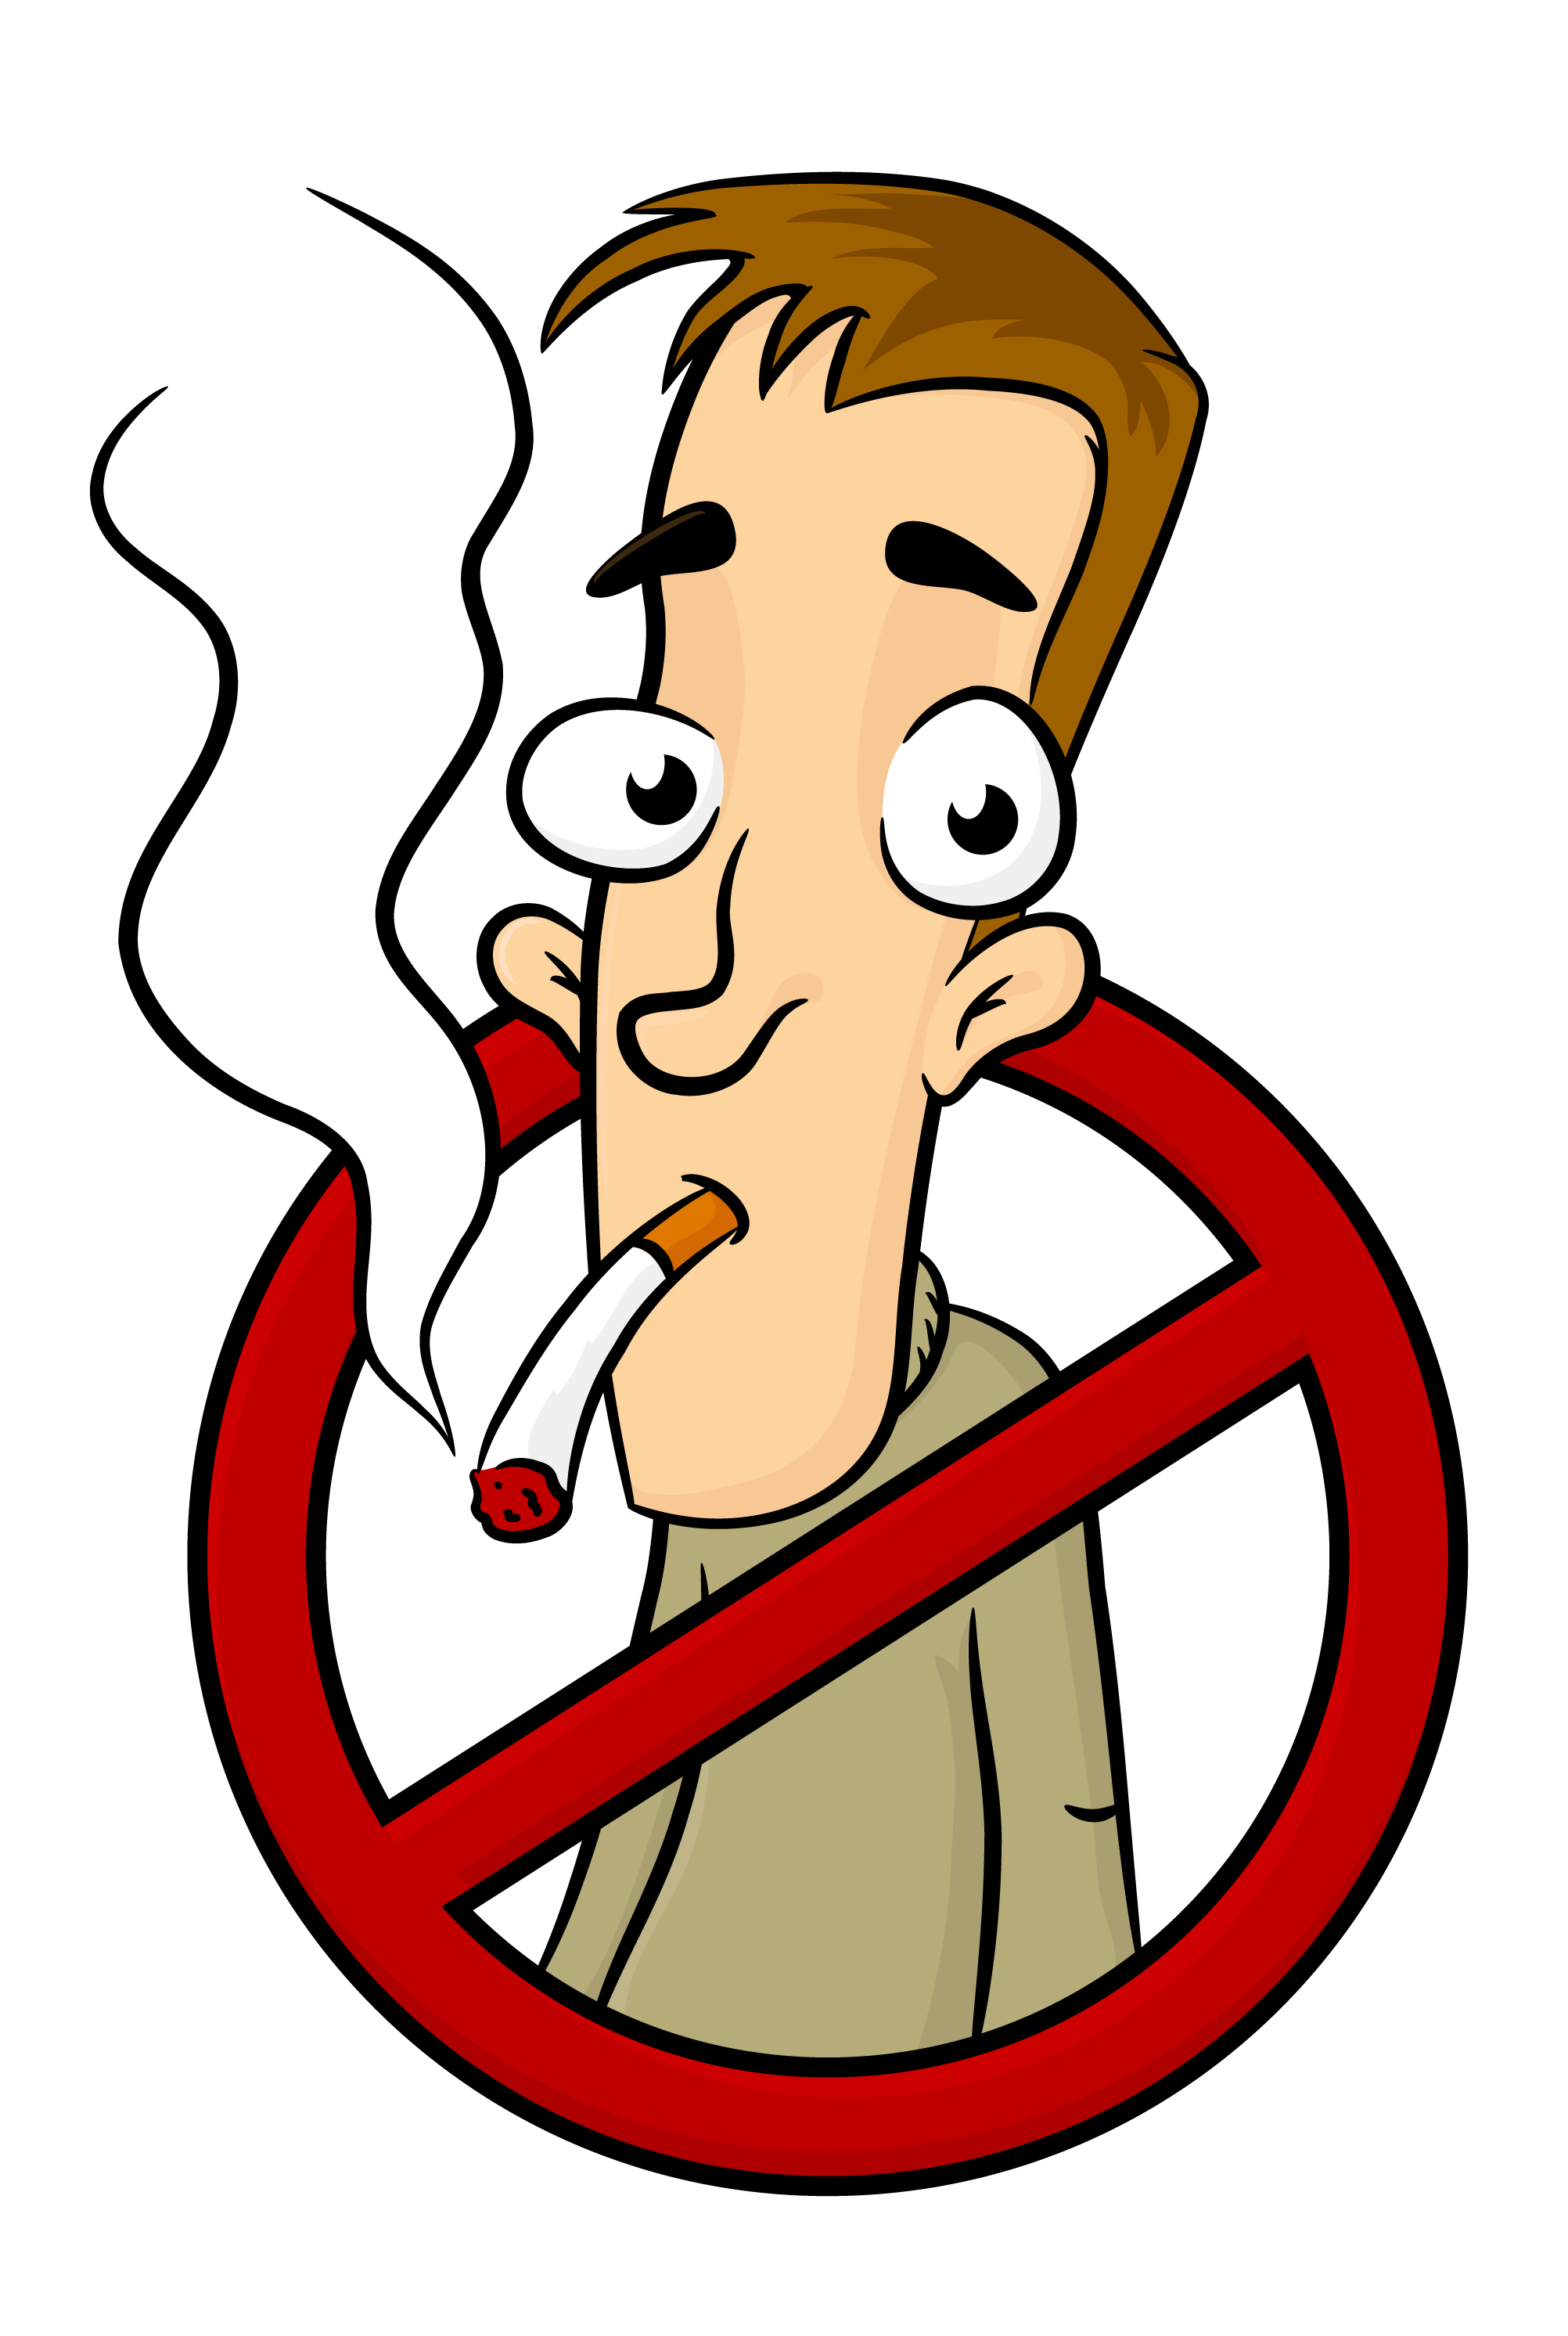 No smoking sign clip art 2 - No Smoking Clipart